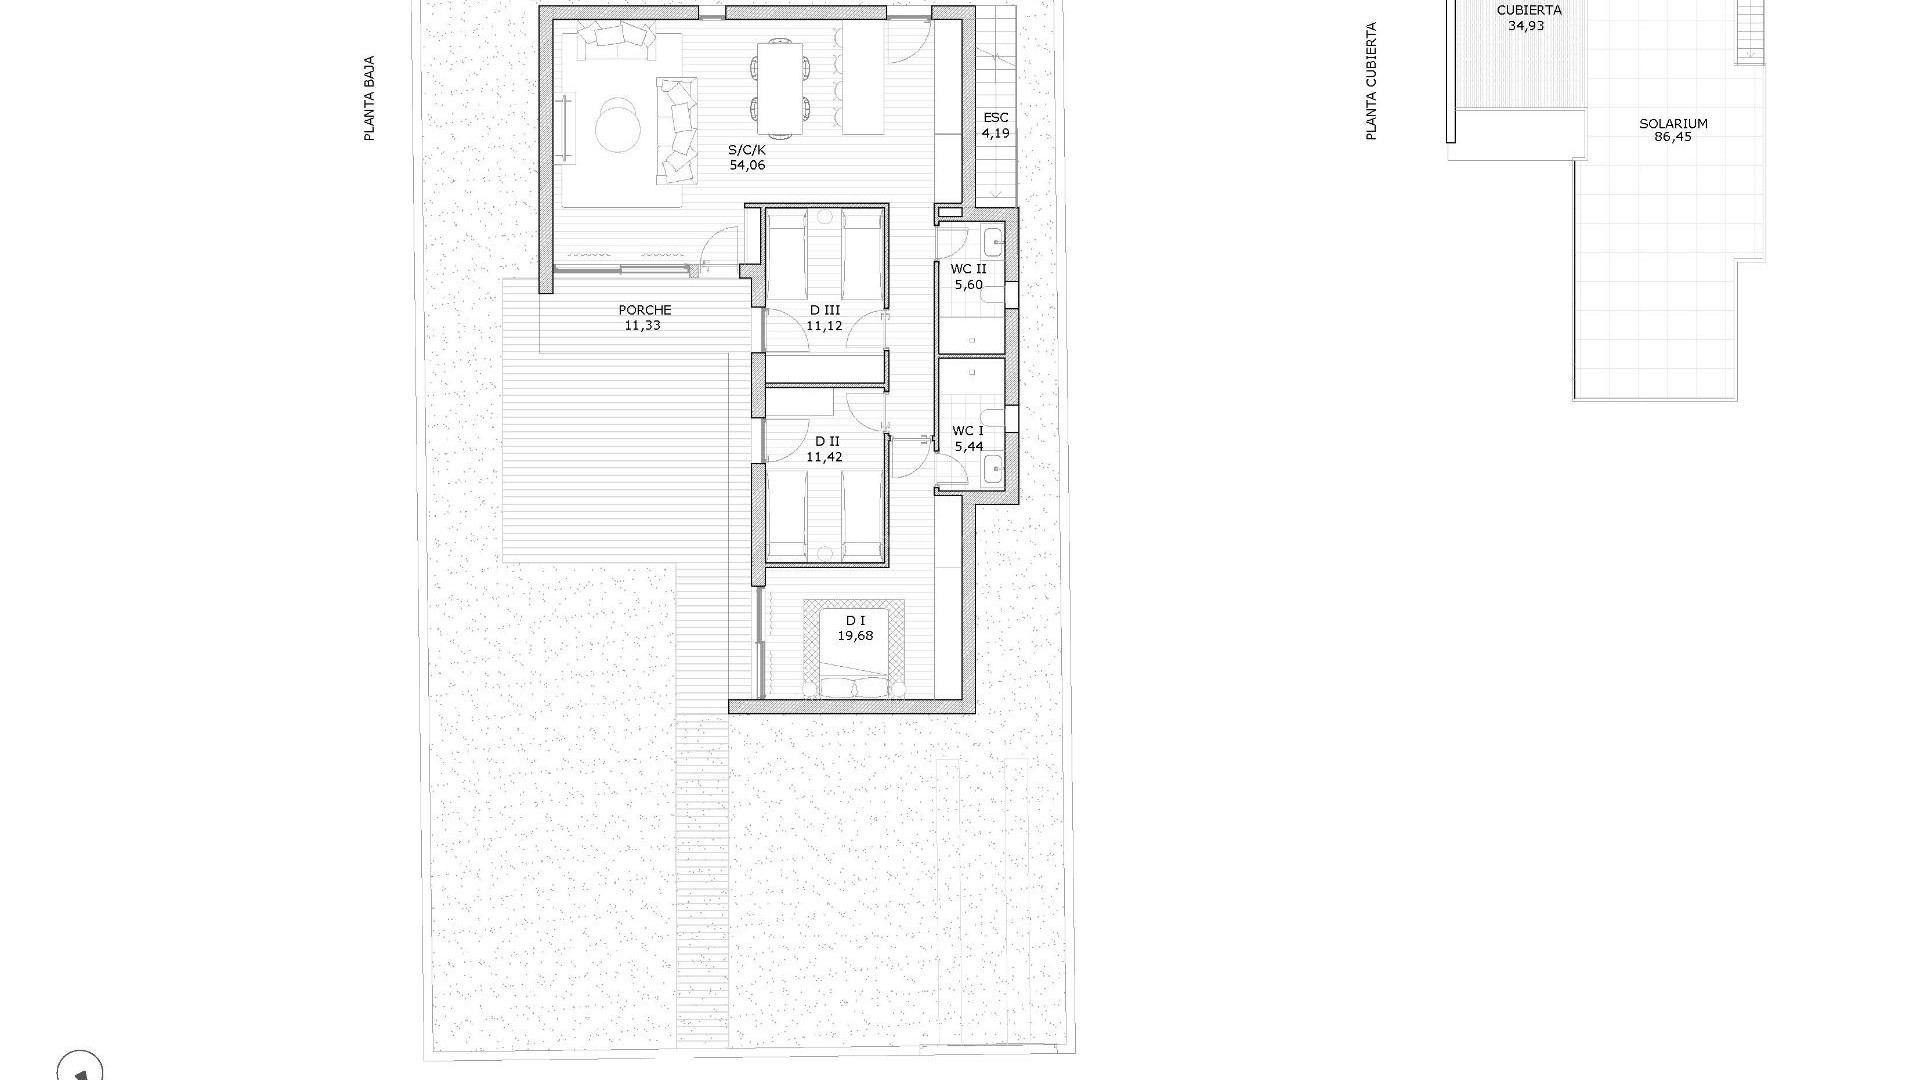 New villas/houses in San Miguel de Salinas, over 1 floor, 3 bedrooms, 2 bathrooms, open plan kitchen, terrace, private solarium, possibility of private pool,